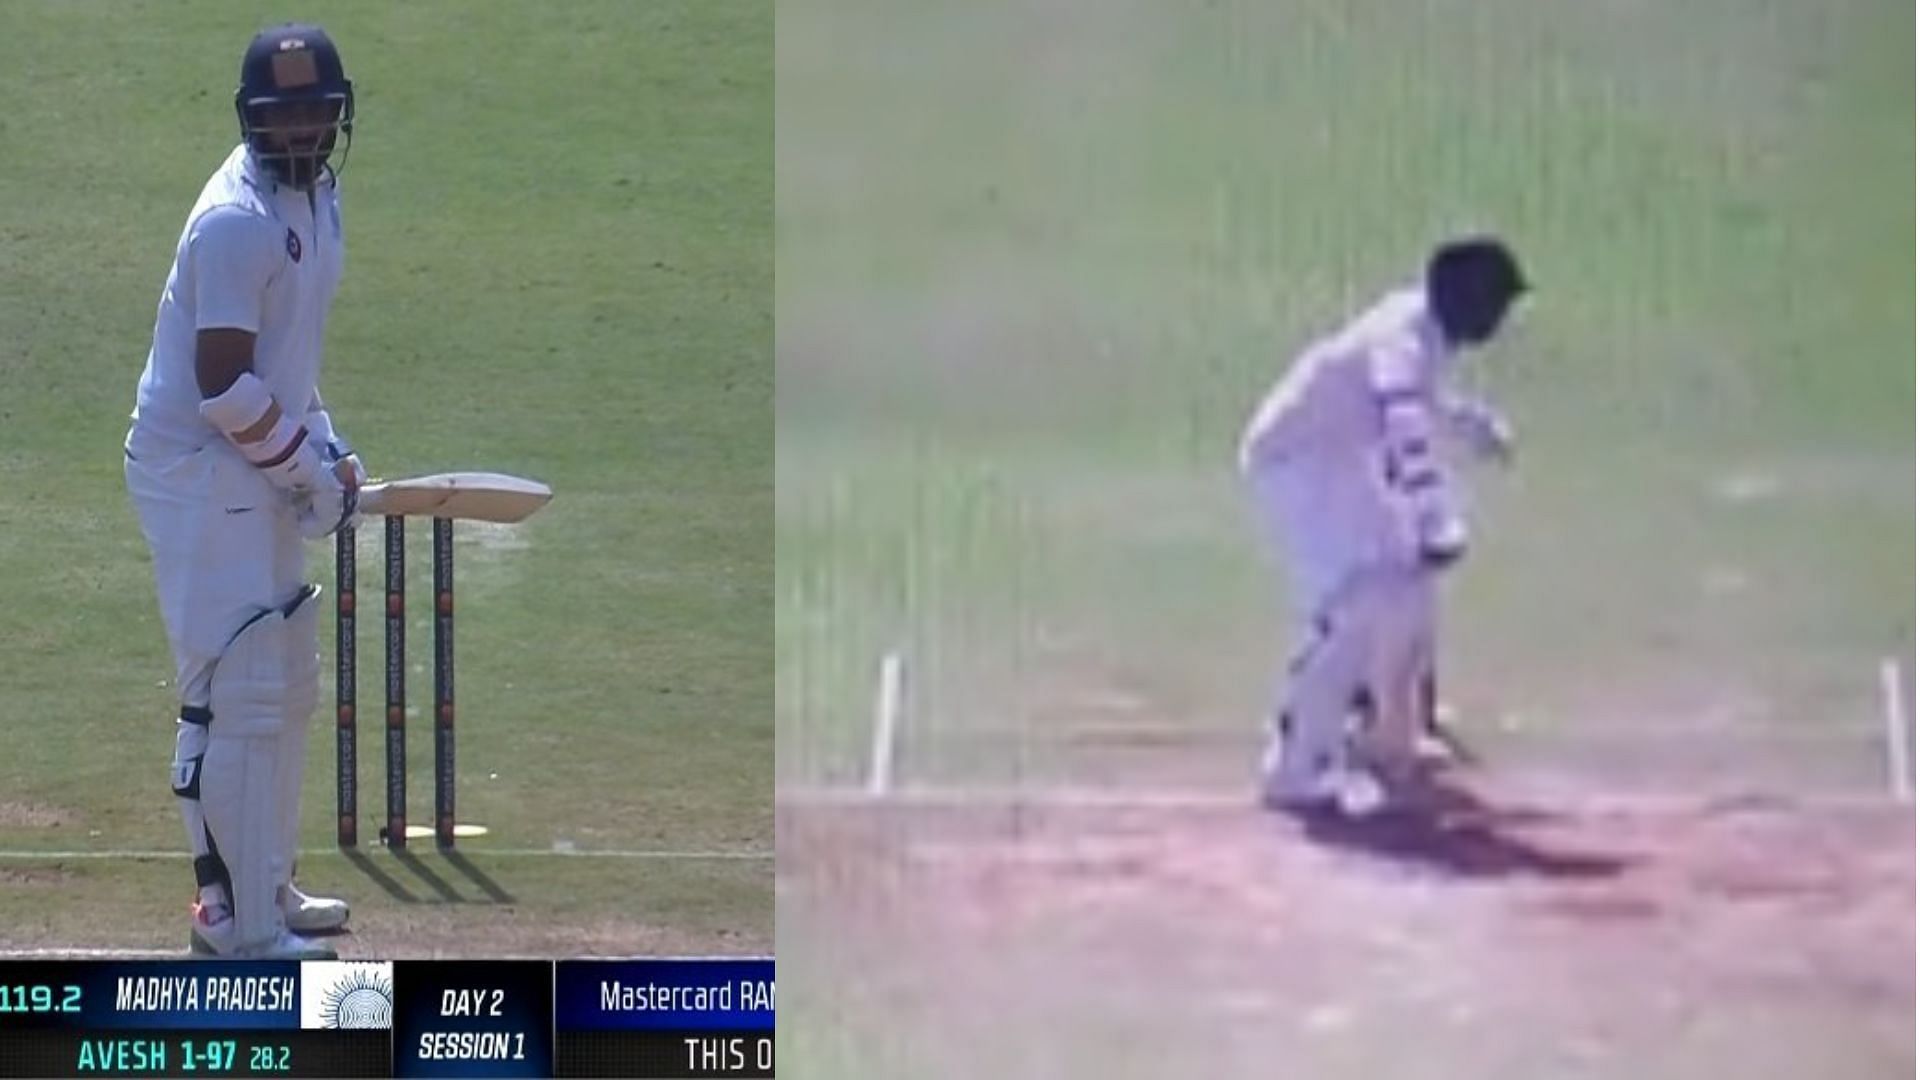 [WATCH] Hanuma Vihari bats left-handed against Madhya Pradesh while battling a wrist fracture 